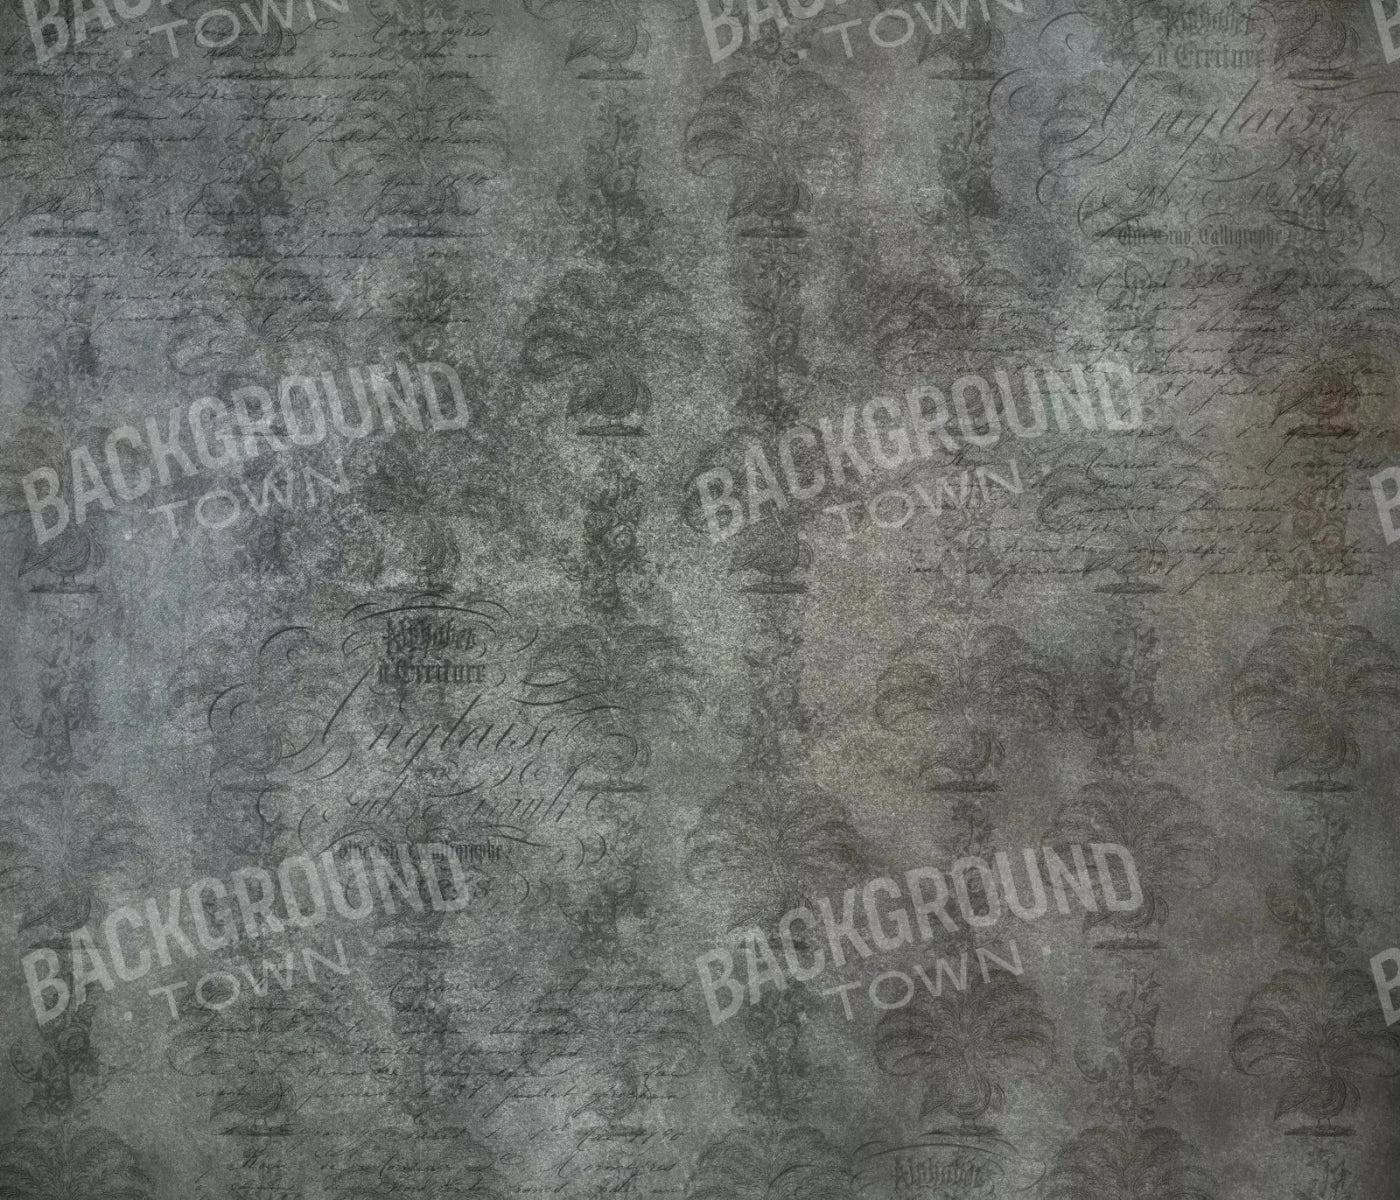 Paris 12X10 Ultracloth ( 144 X 120 Inch ) Backdrop